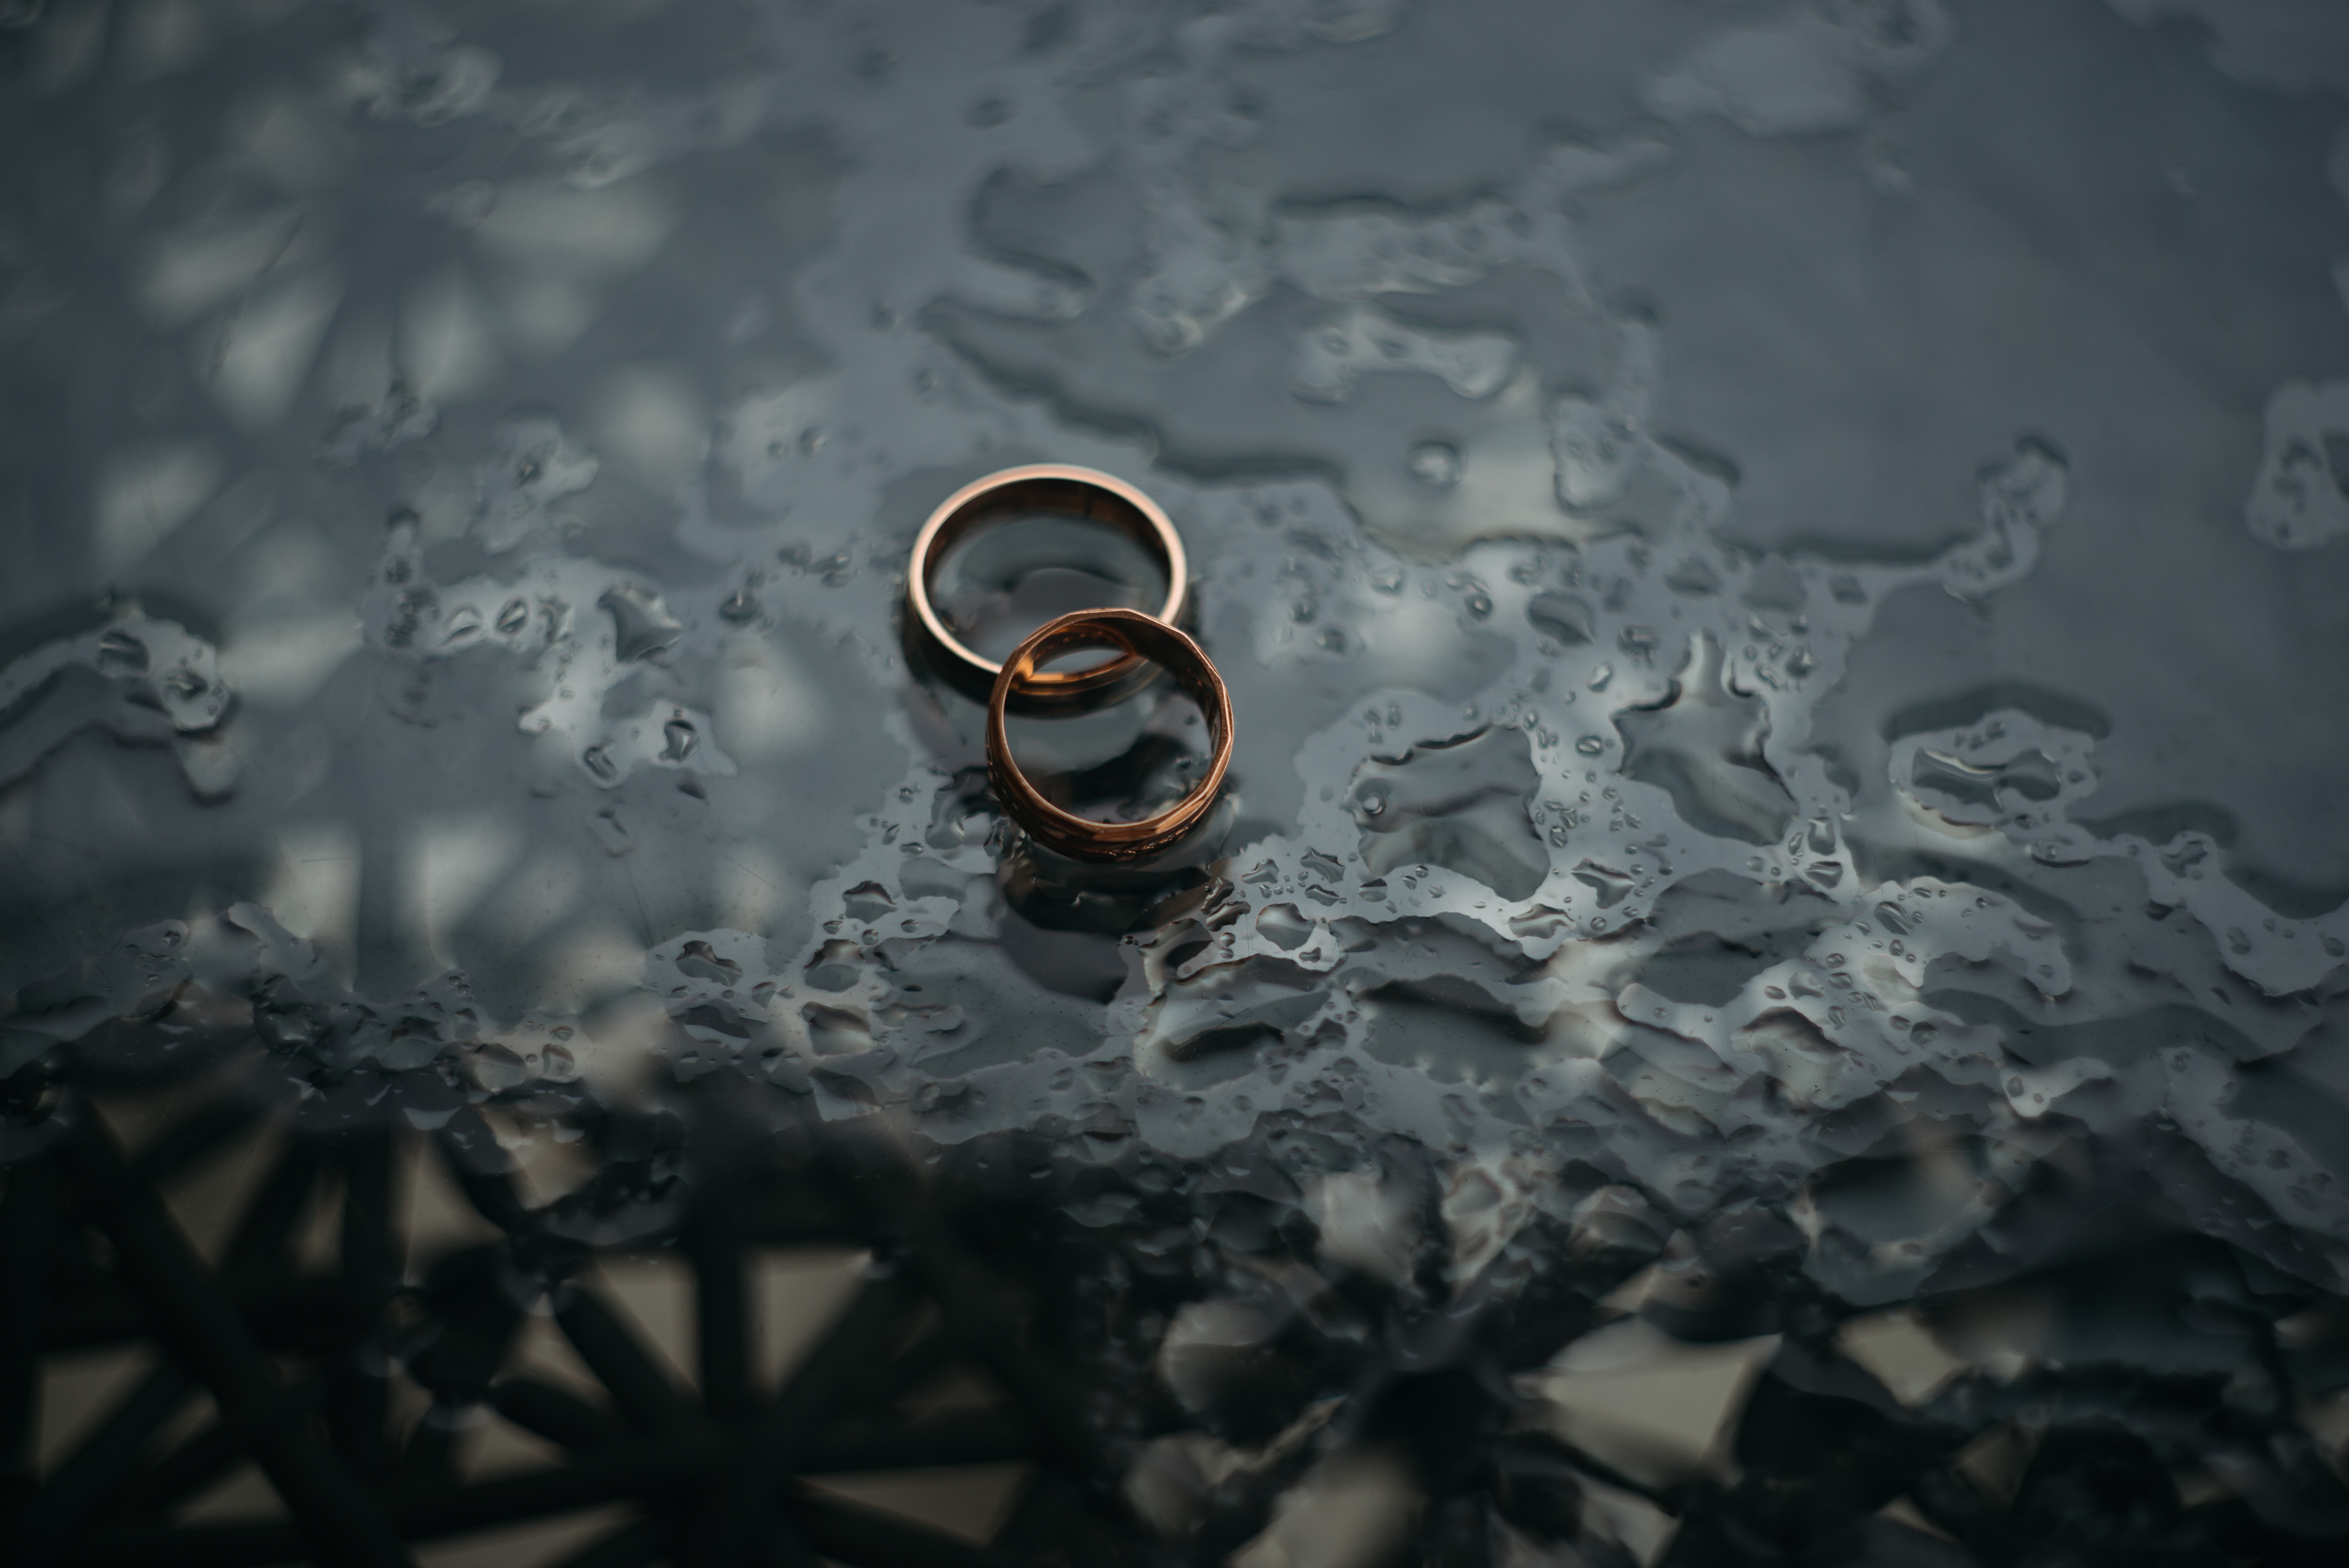 Two wedding rings in the rain representing divorce